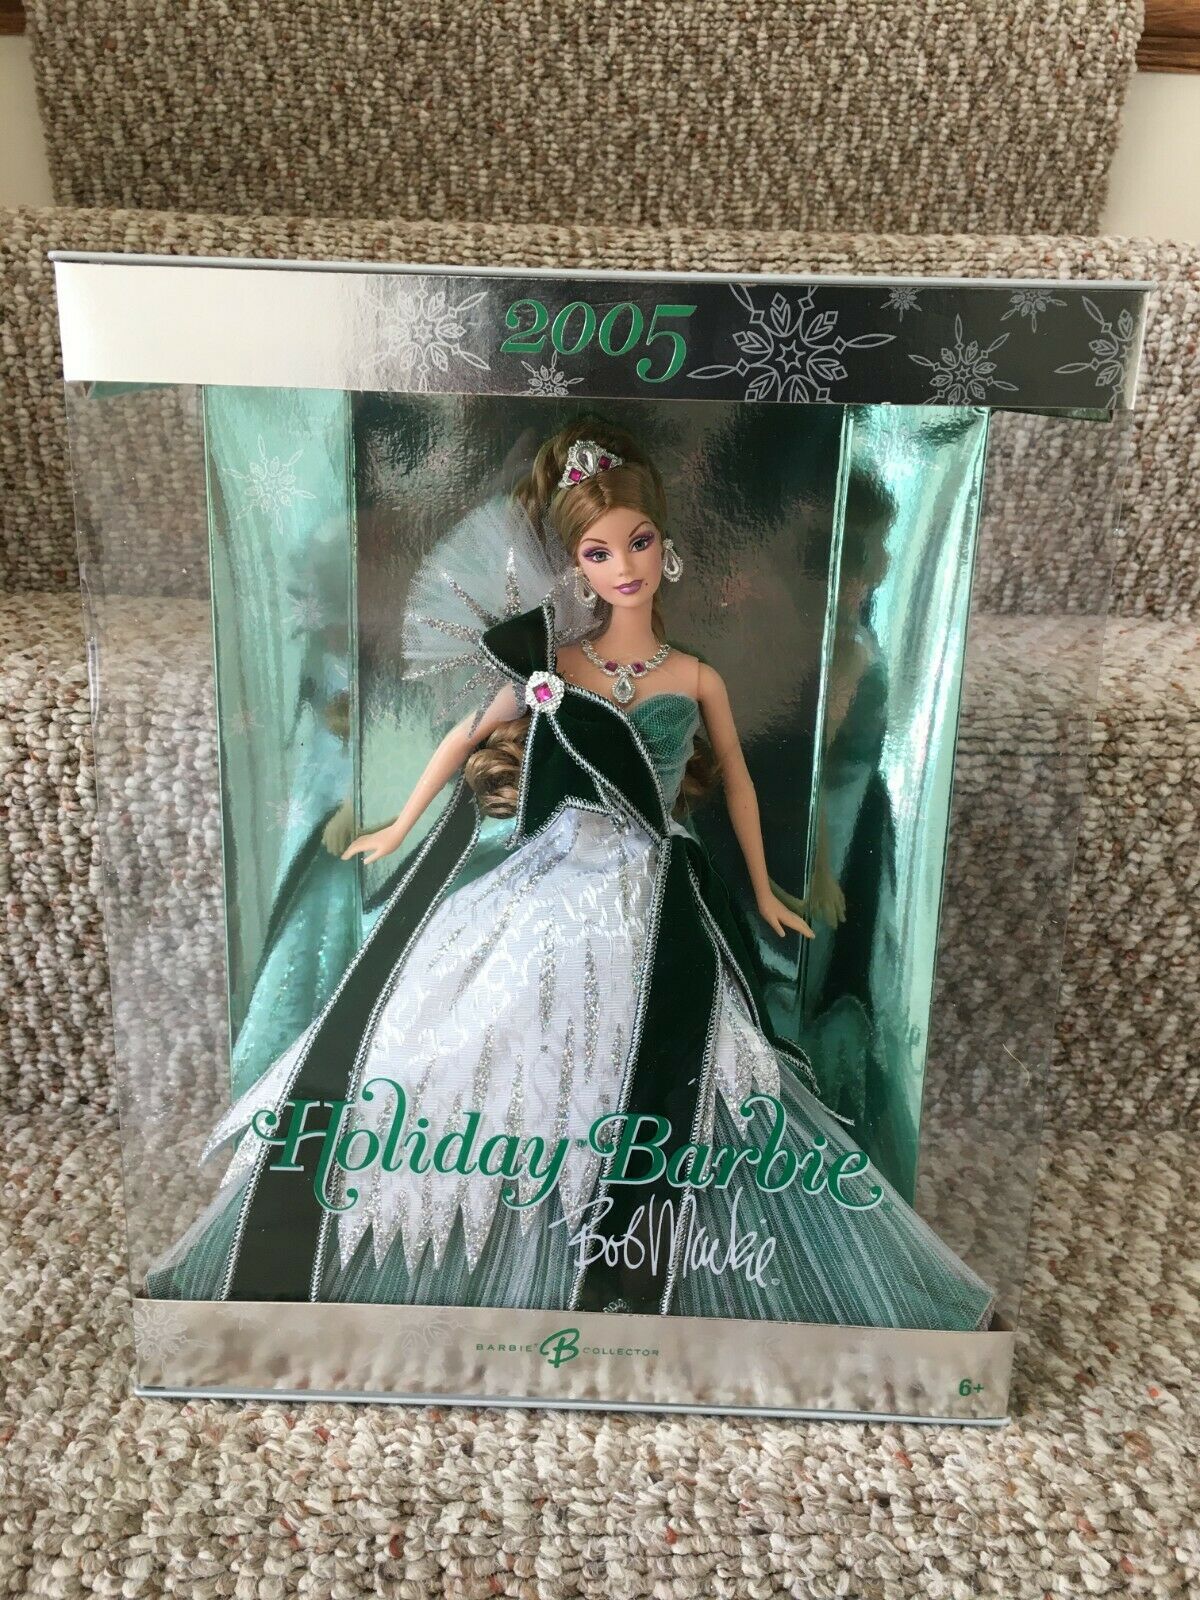 Collectible Bob Mackie 2005 Holiday Barbie - Emerald Green - Nib